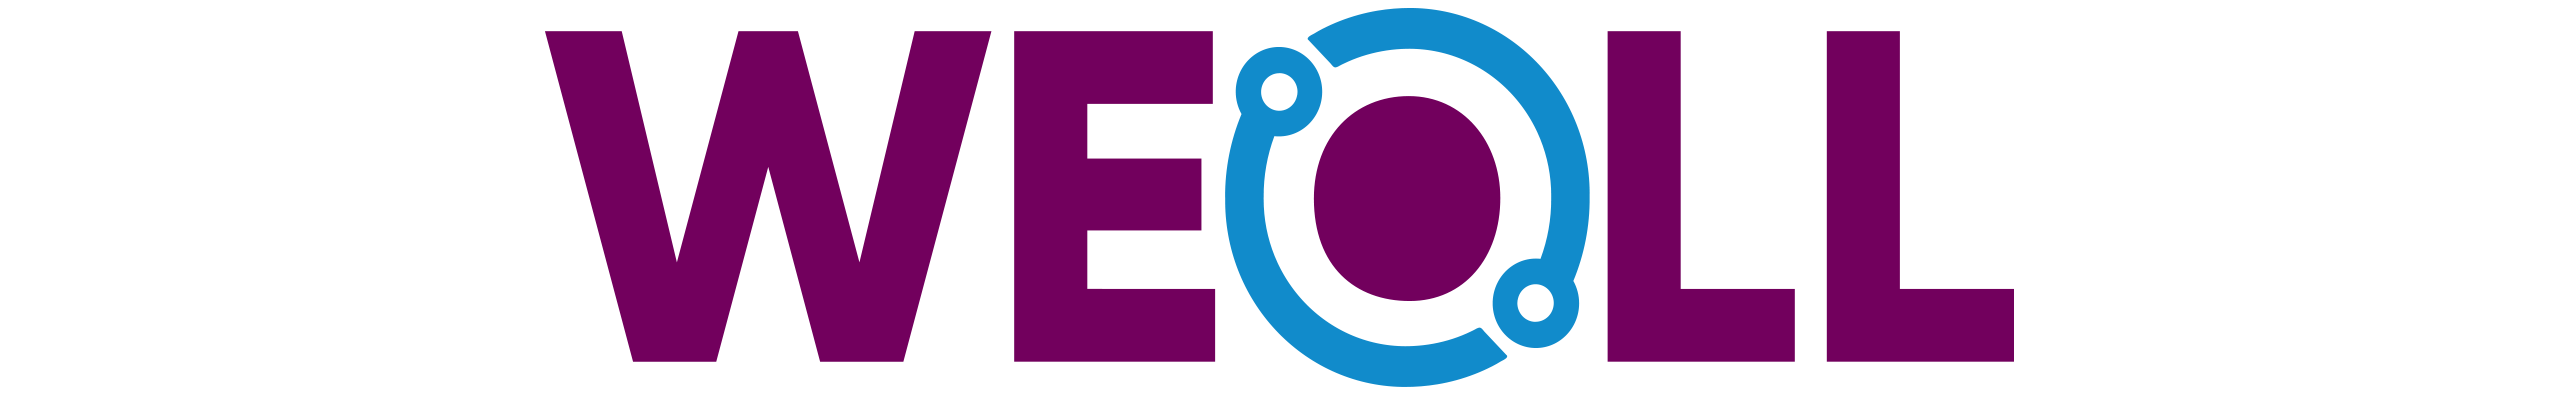 weoll-logo-2